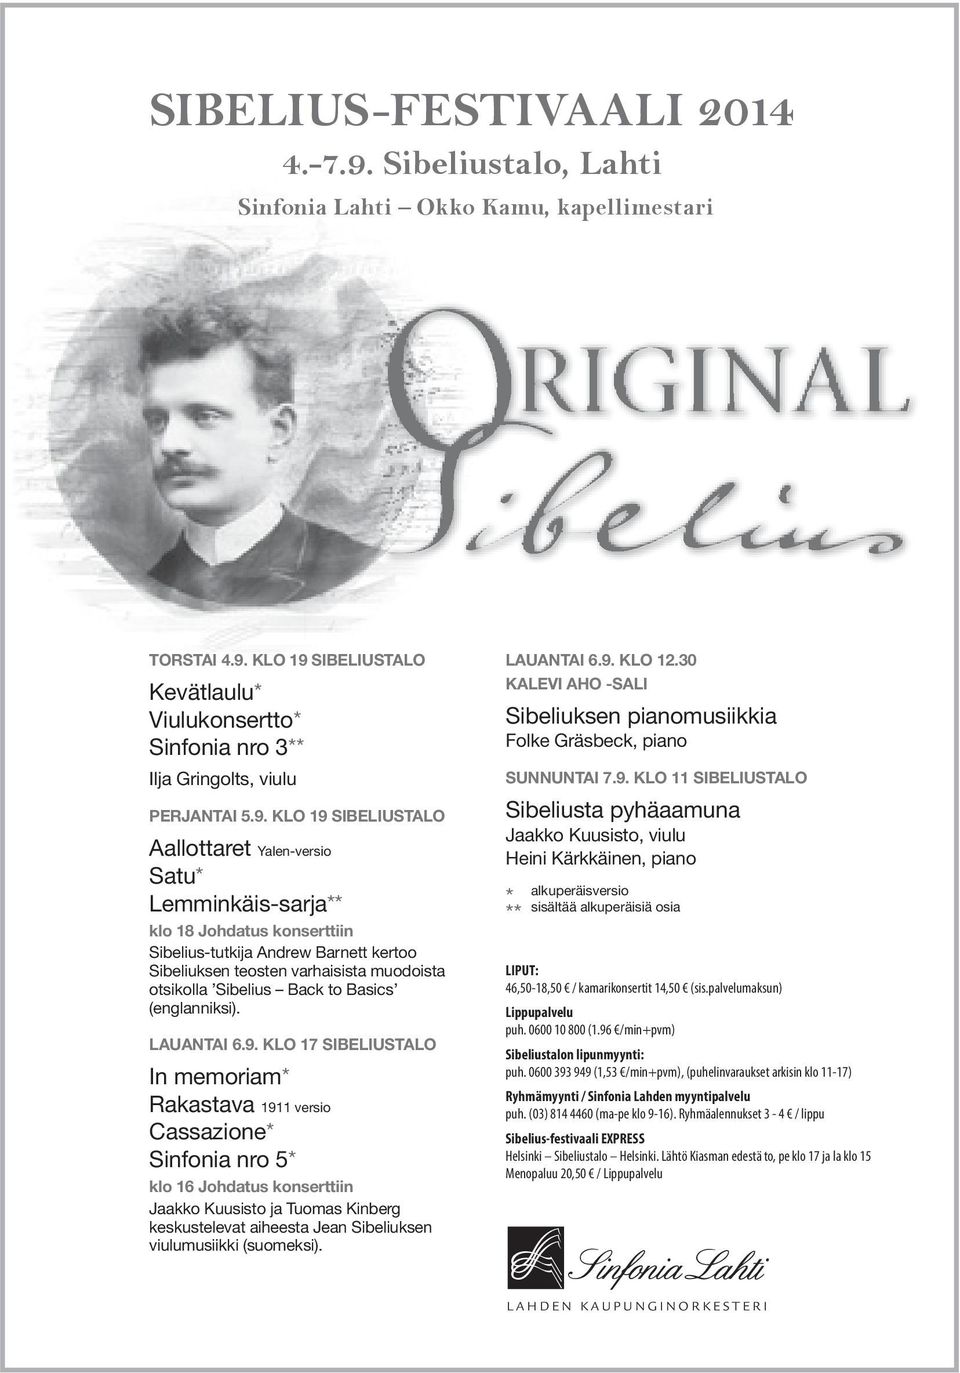 Sibelius Back to Basics (englanniksi). LAUANTAI 6.9.